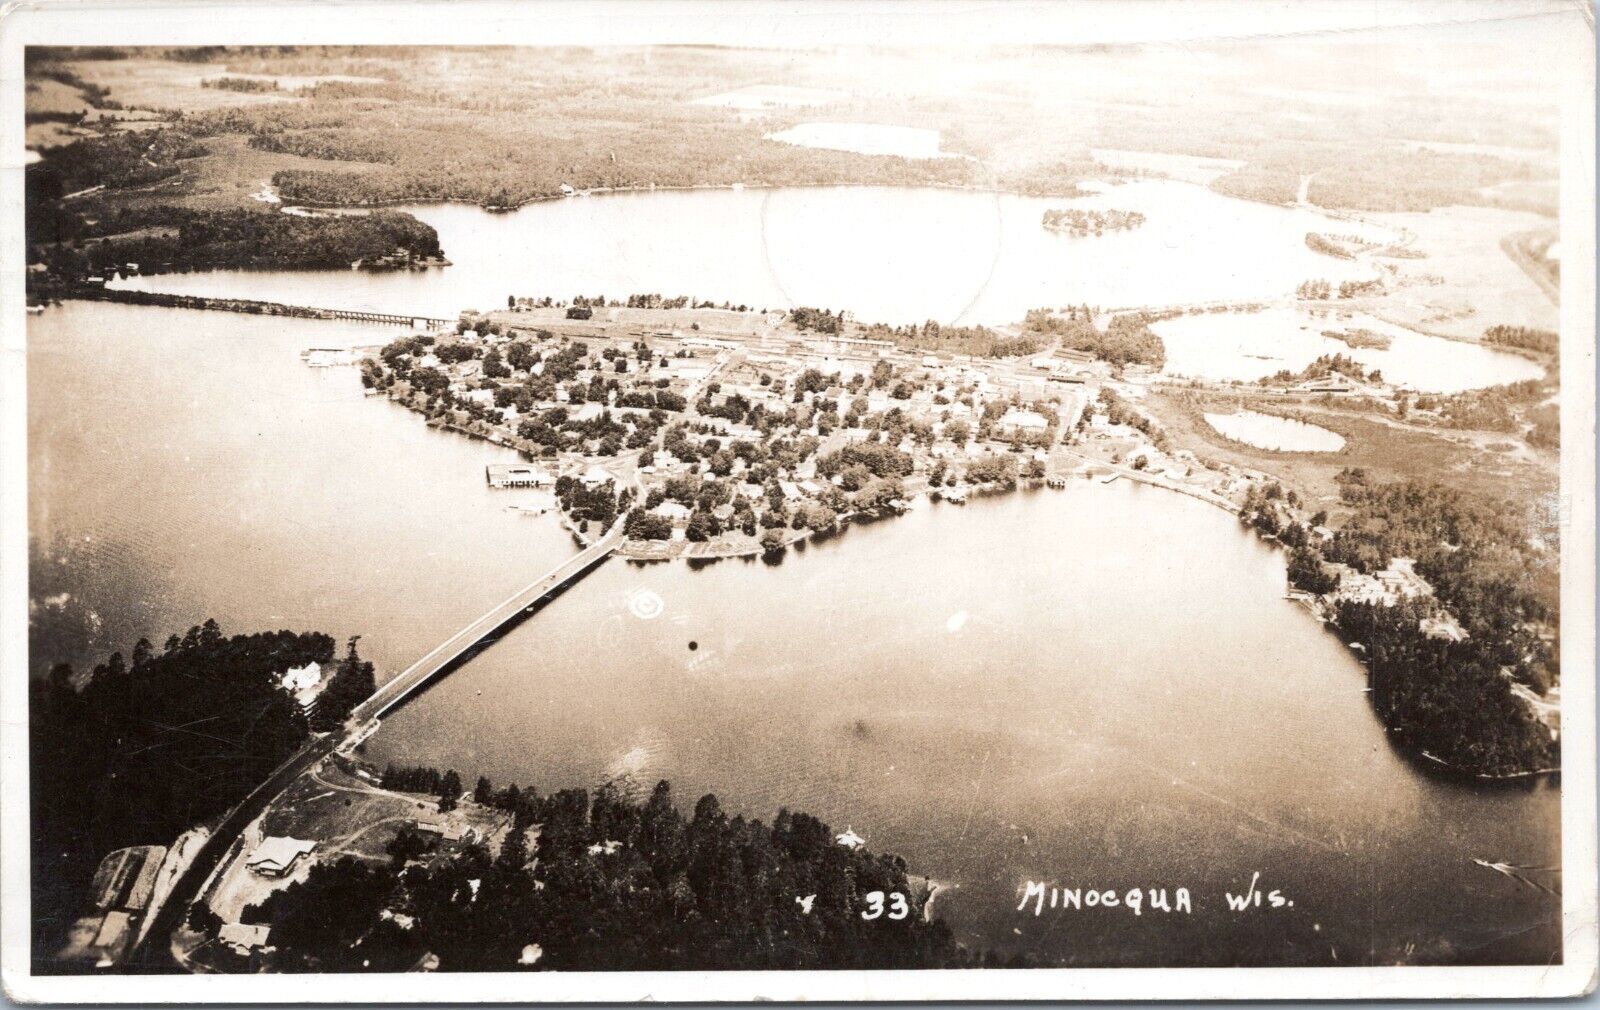 Aerial Birdseye View of Minocqua, Wisconsin - Real Photo Postcard - Island 1940